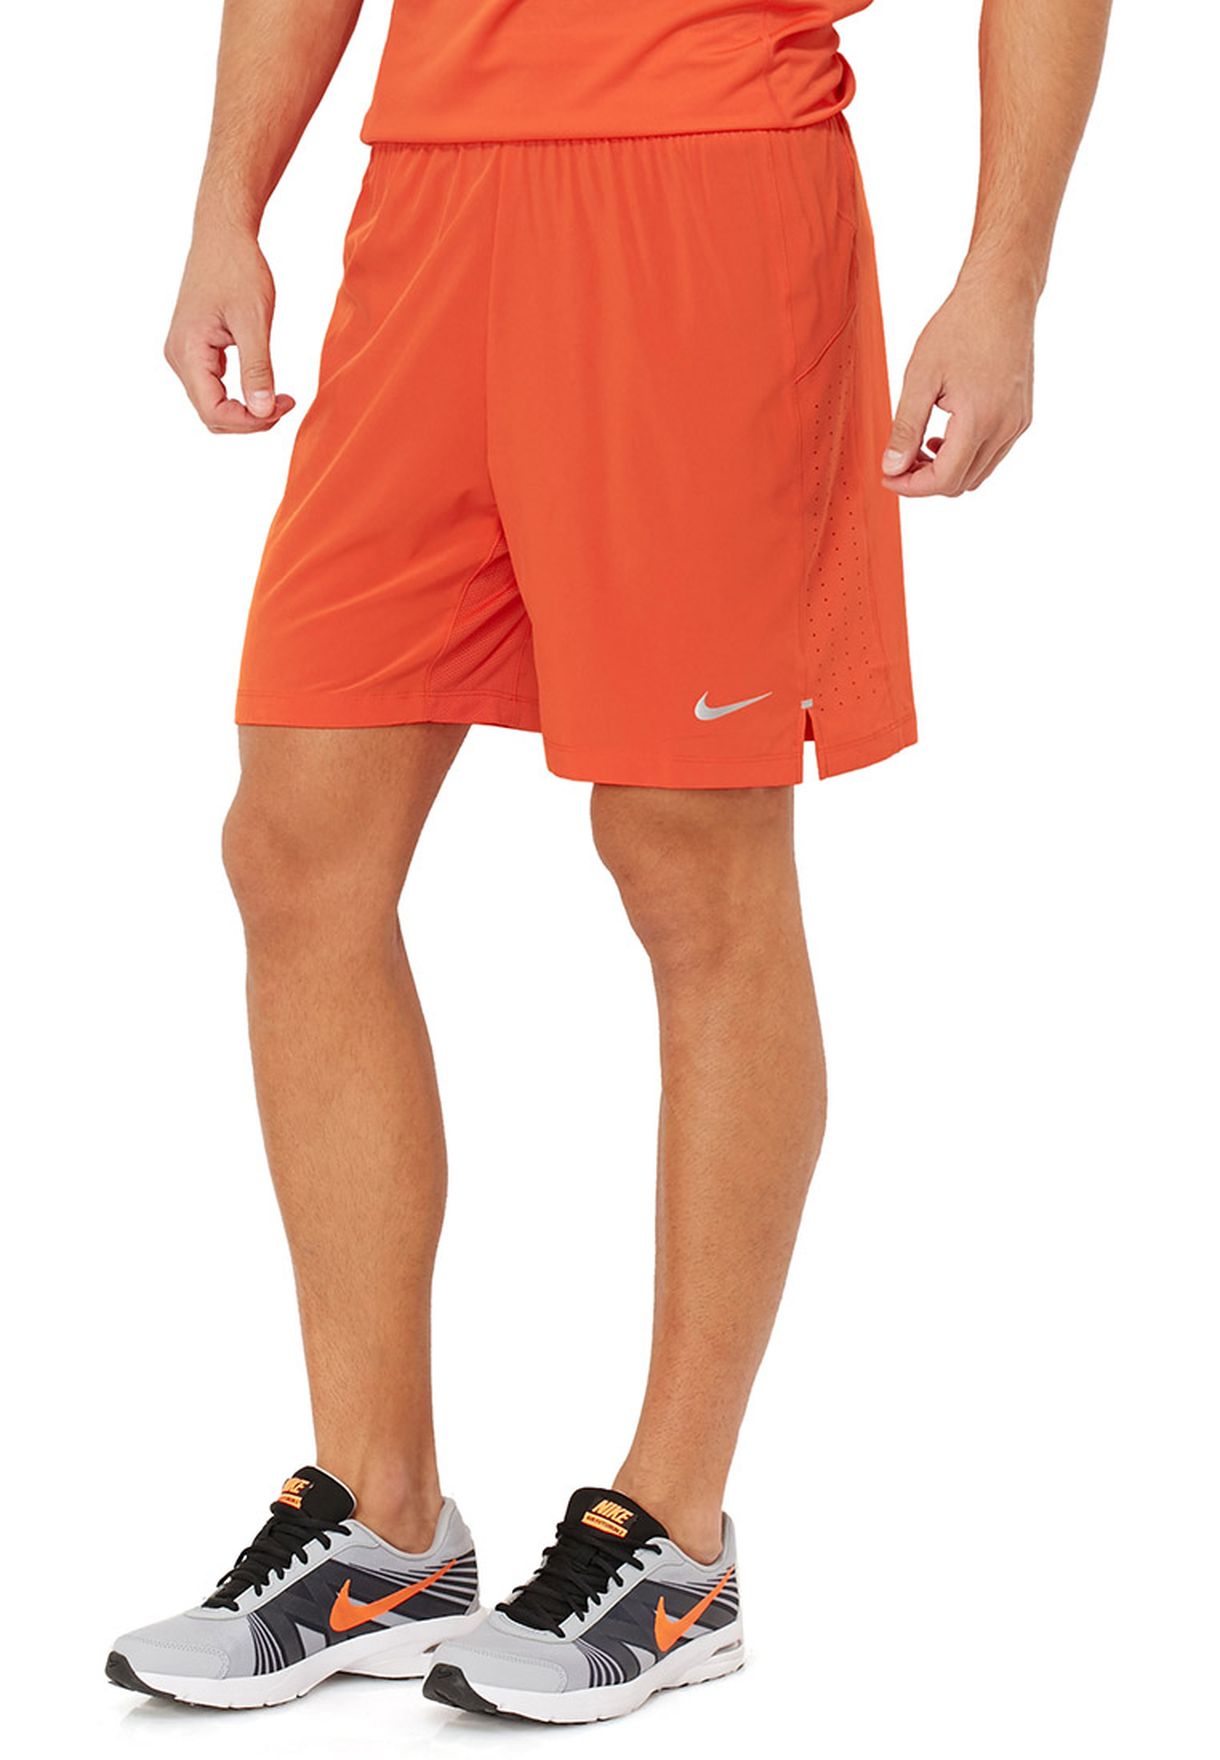 Buy Nike orange Phenom 2-In-1 Running 